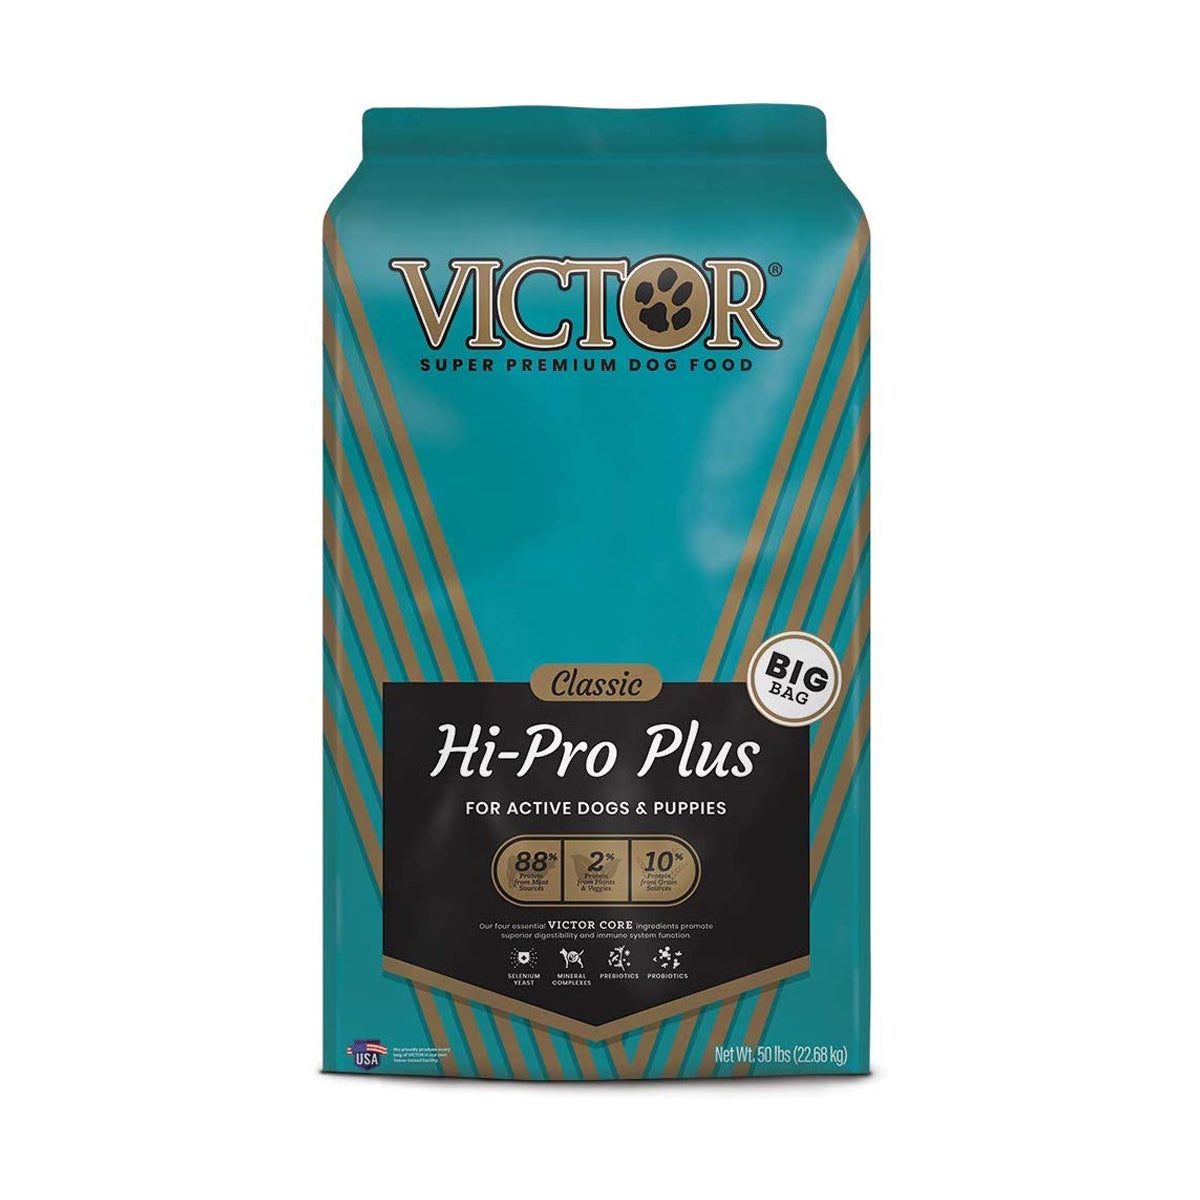 Victor Classic Hi-Pro Plus Dry Dog Food 50lb